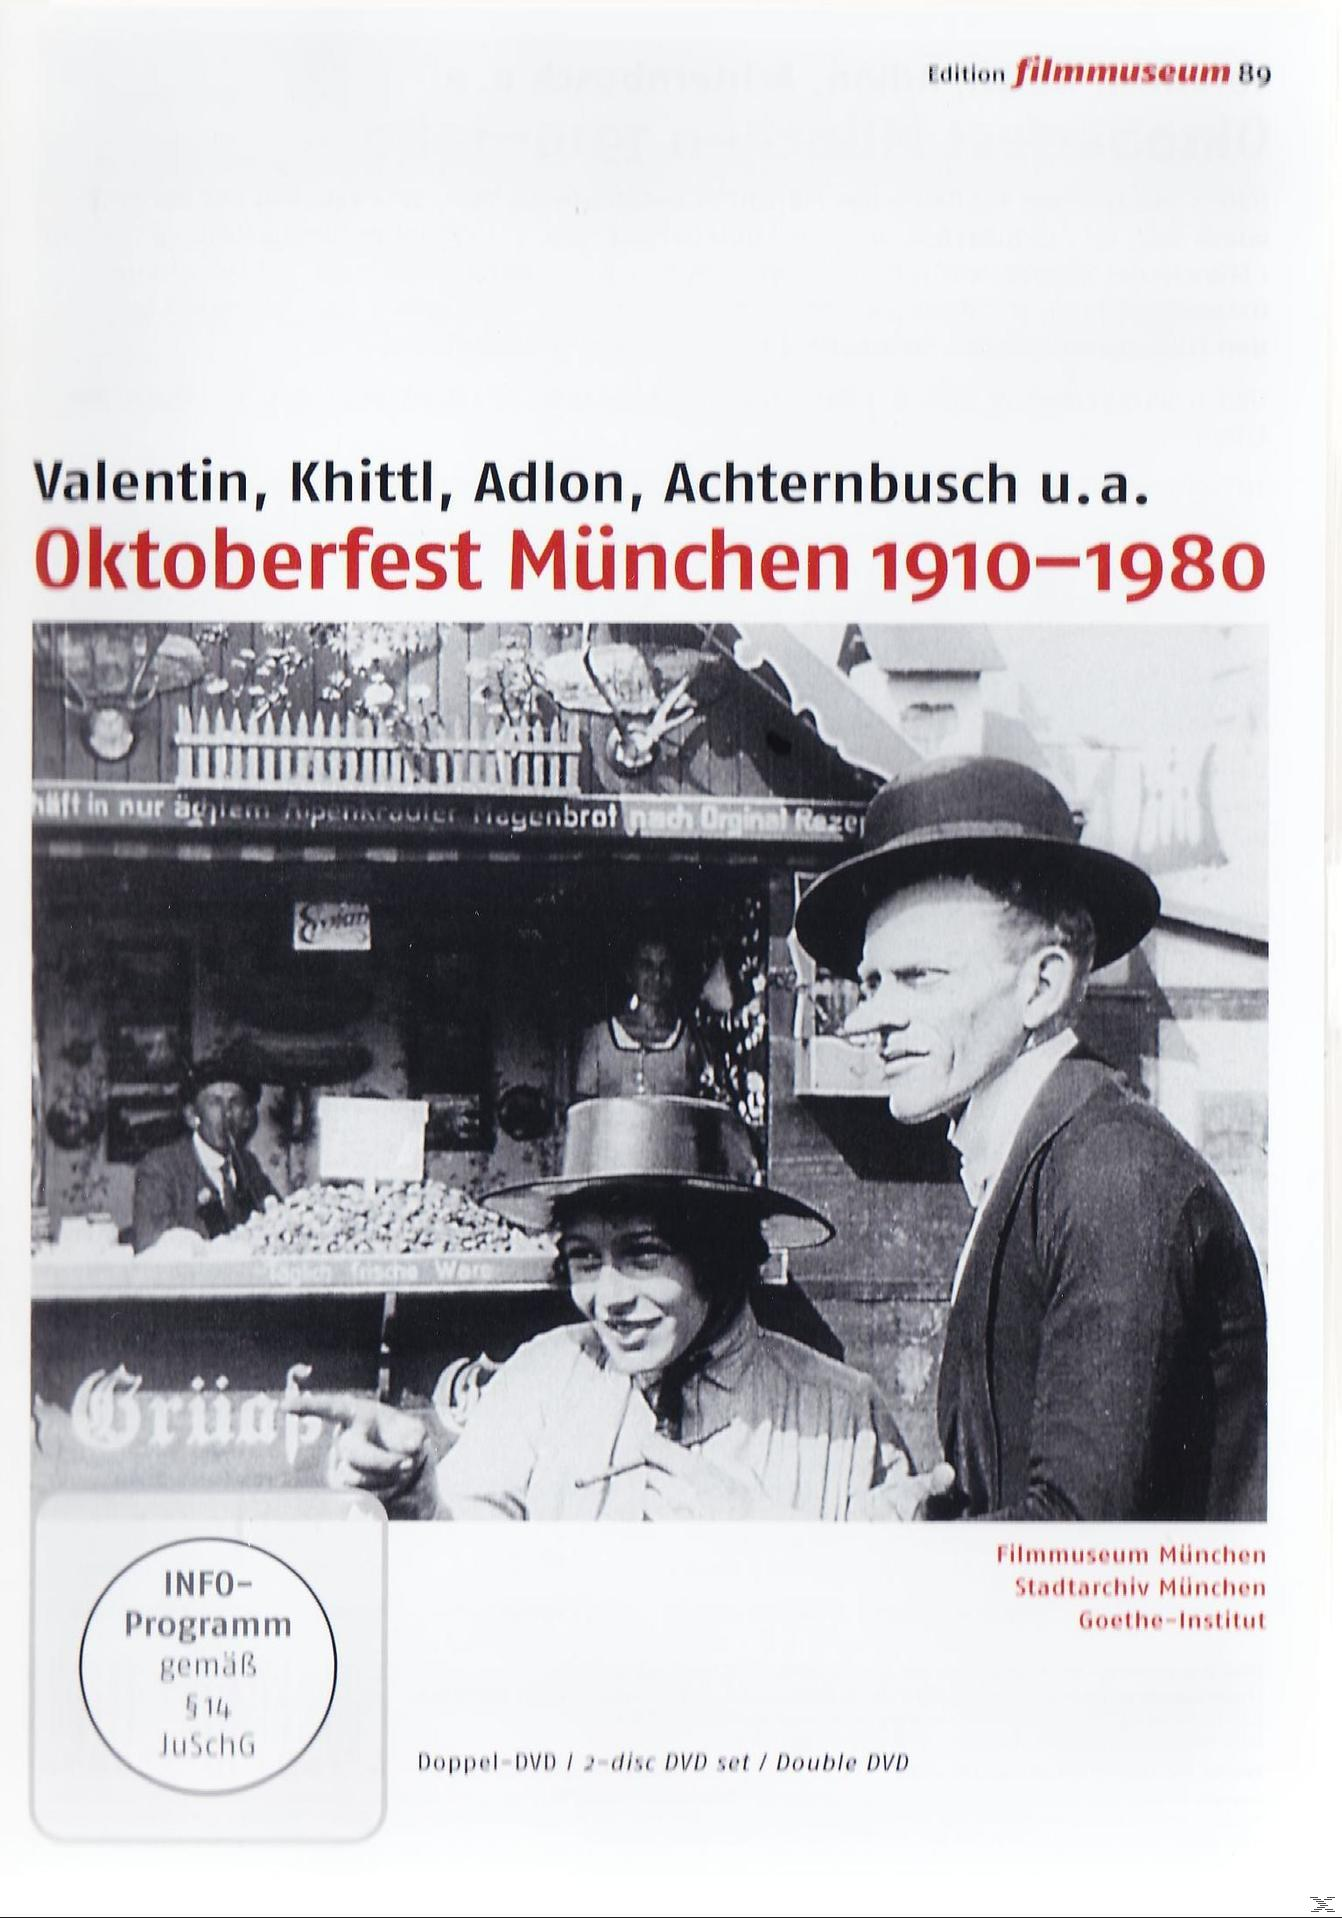 OKTOBERFEST MÜNCHEN 1910-1980 EDITION - FILMMUSEUM DVD